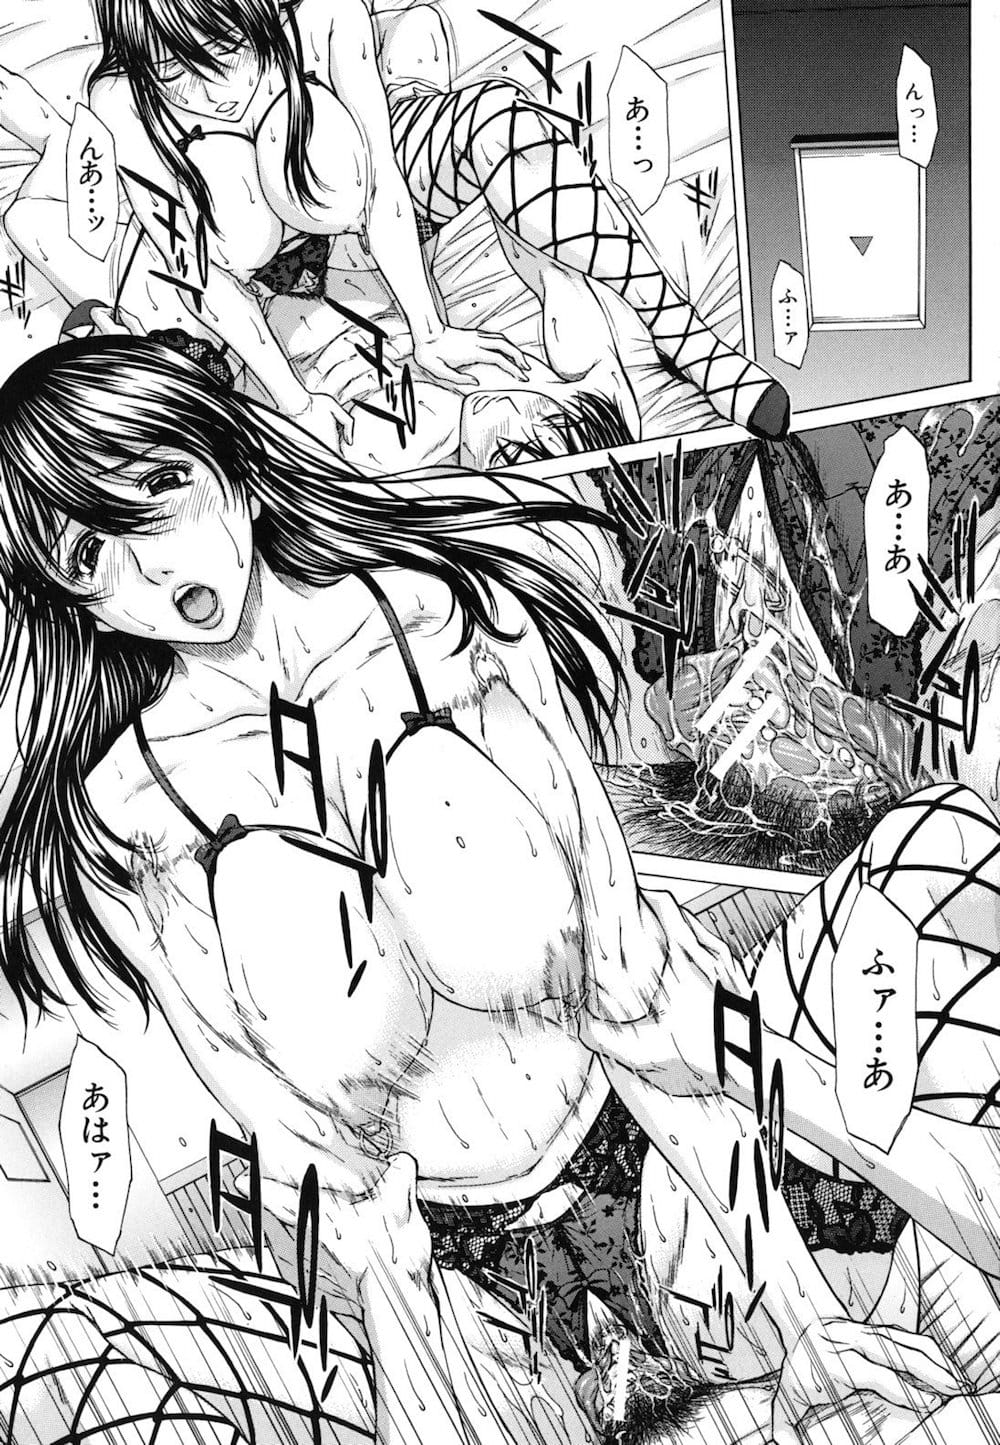 Nudity manga 👉 👌 Manga Nudity - /e/ - Ecchi - 4archive.org